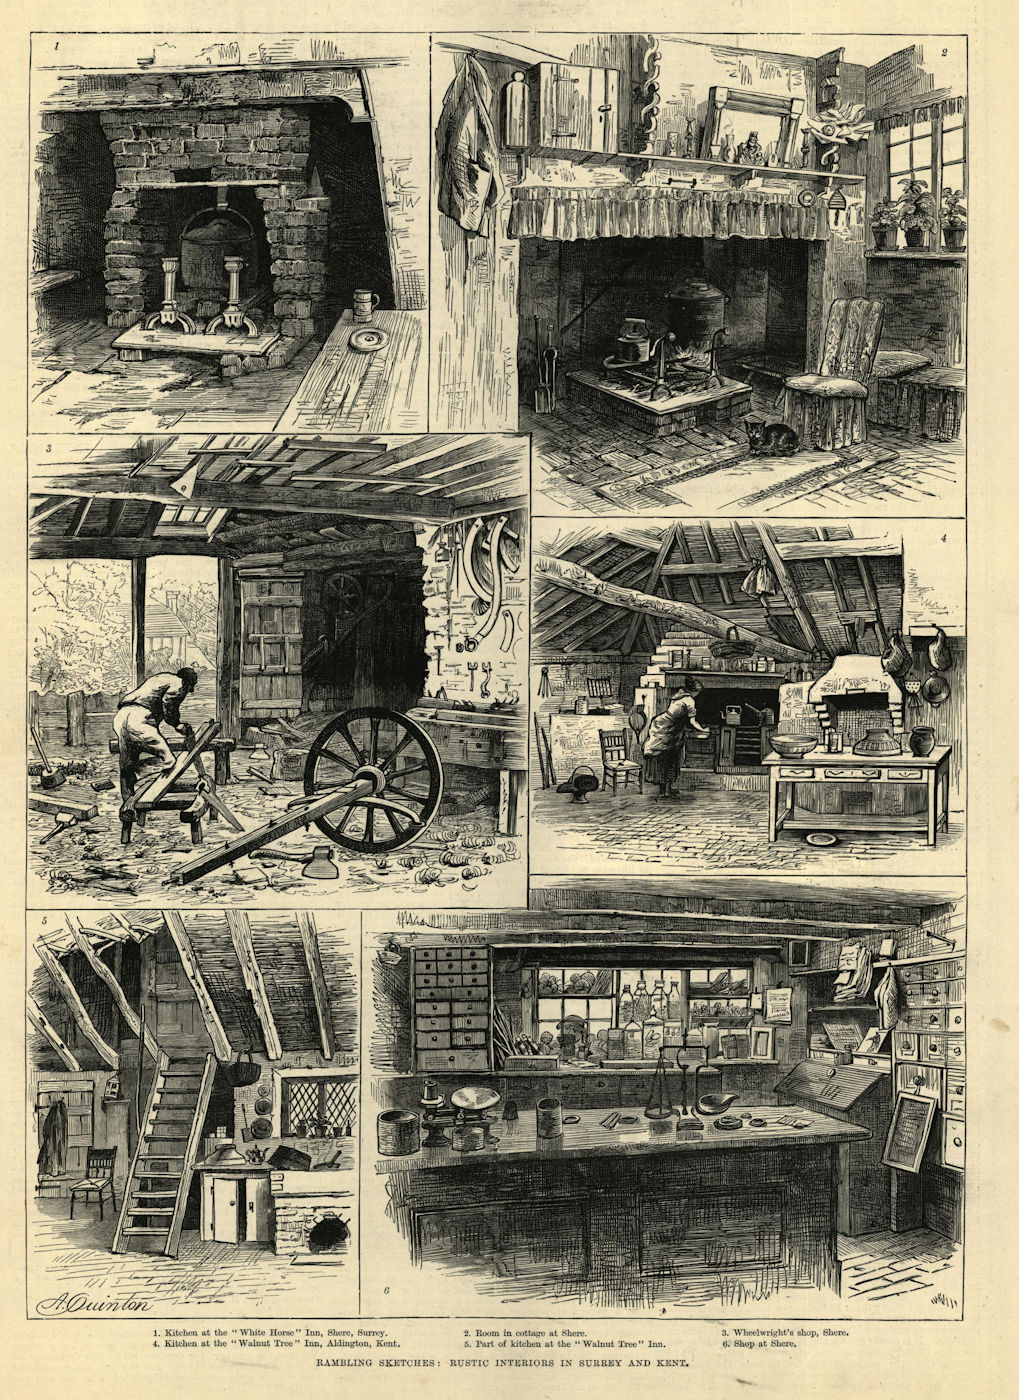 Associate Product White Horse Inn, Shere, Surrey. Walnut Tree Inn, Aldington, Kent 1885 print